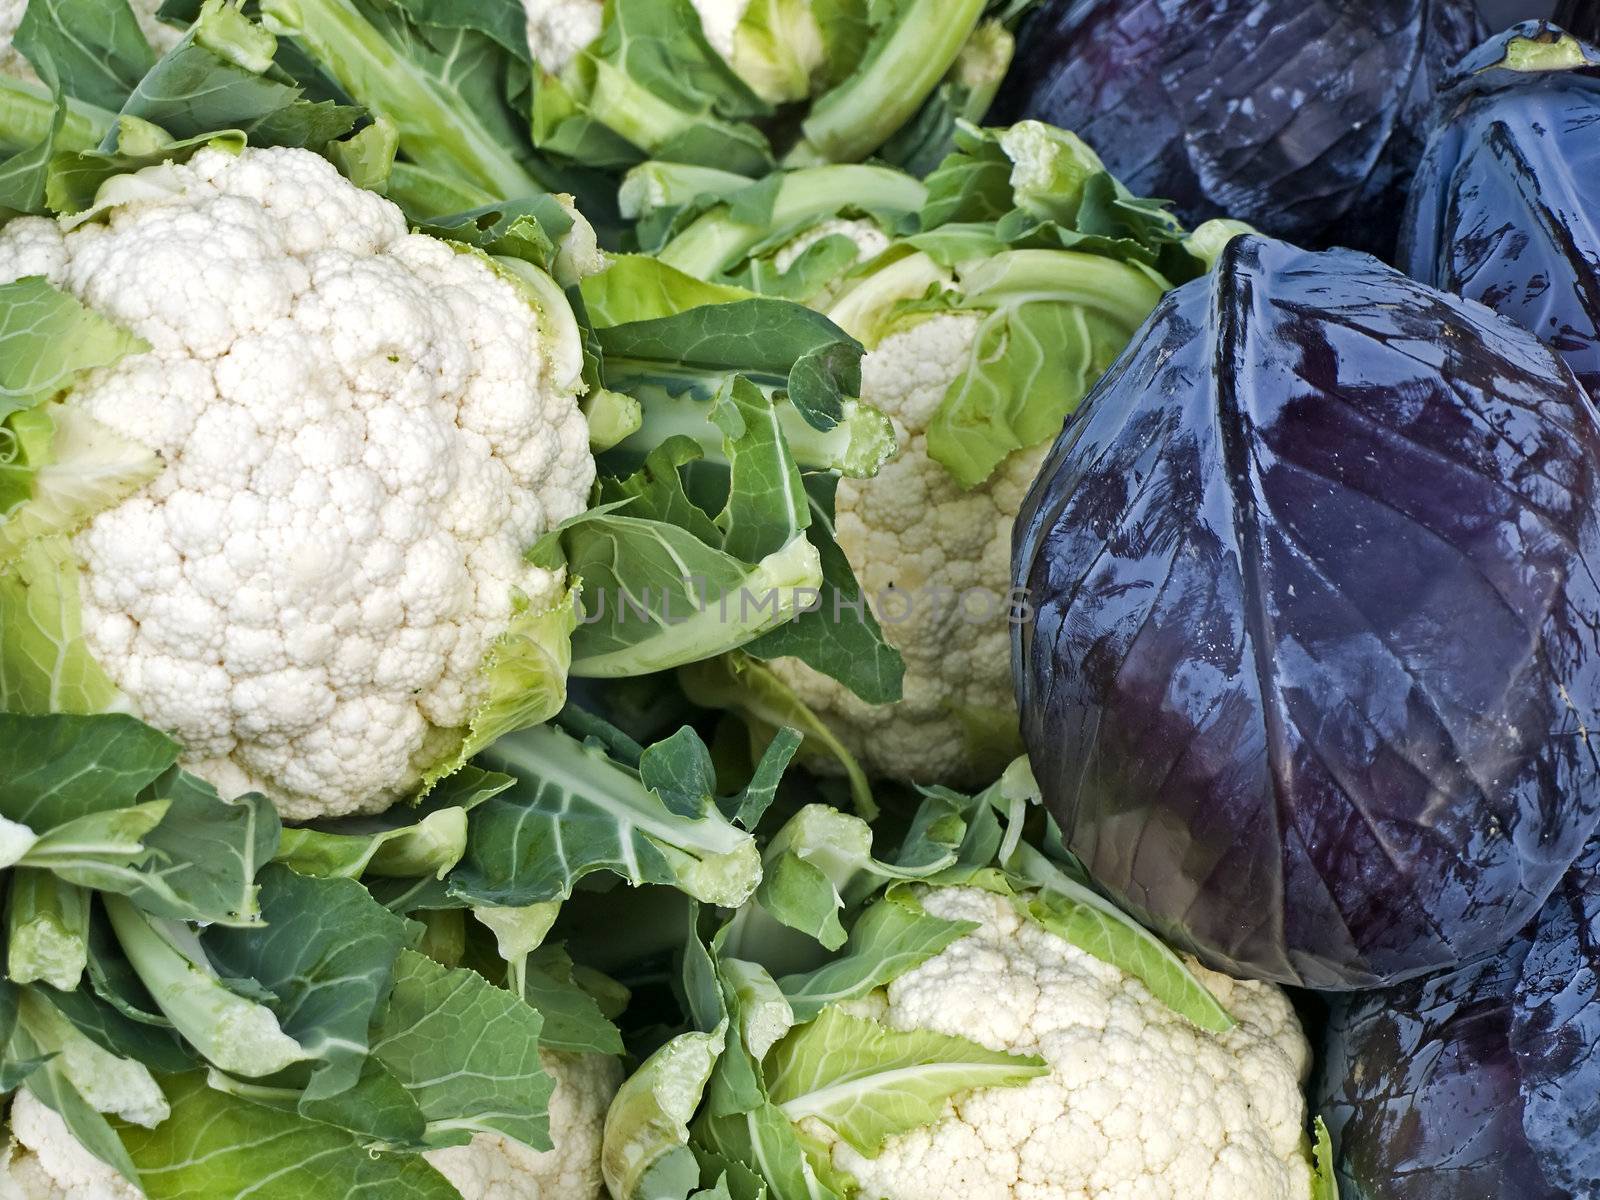 cauliflower and blue kale at a farmer market